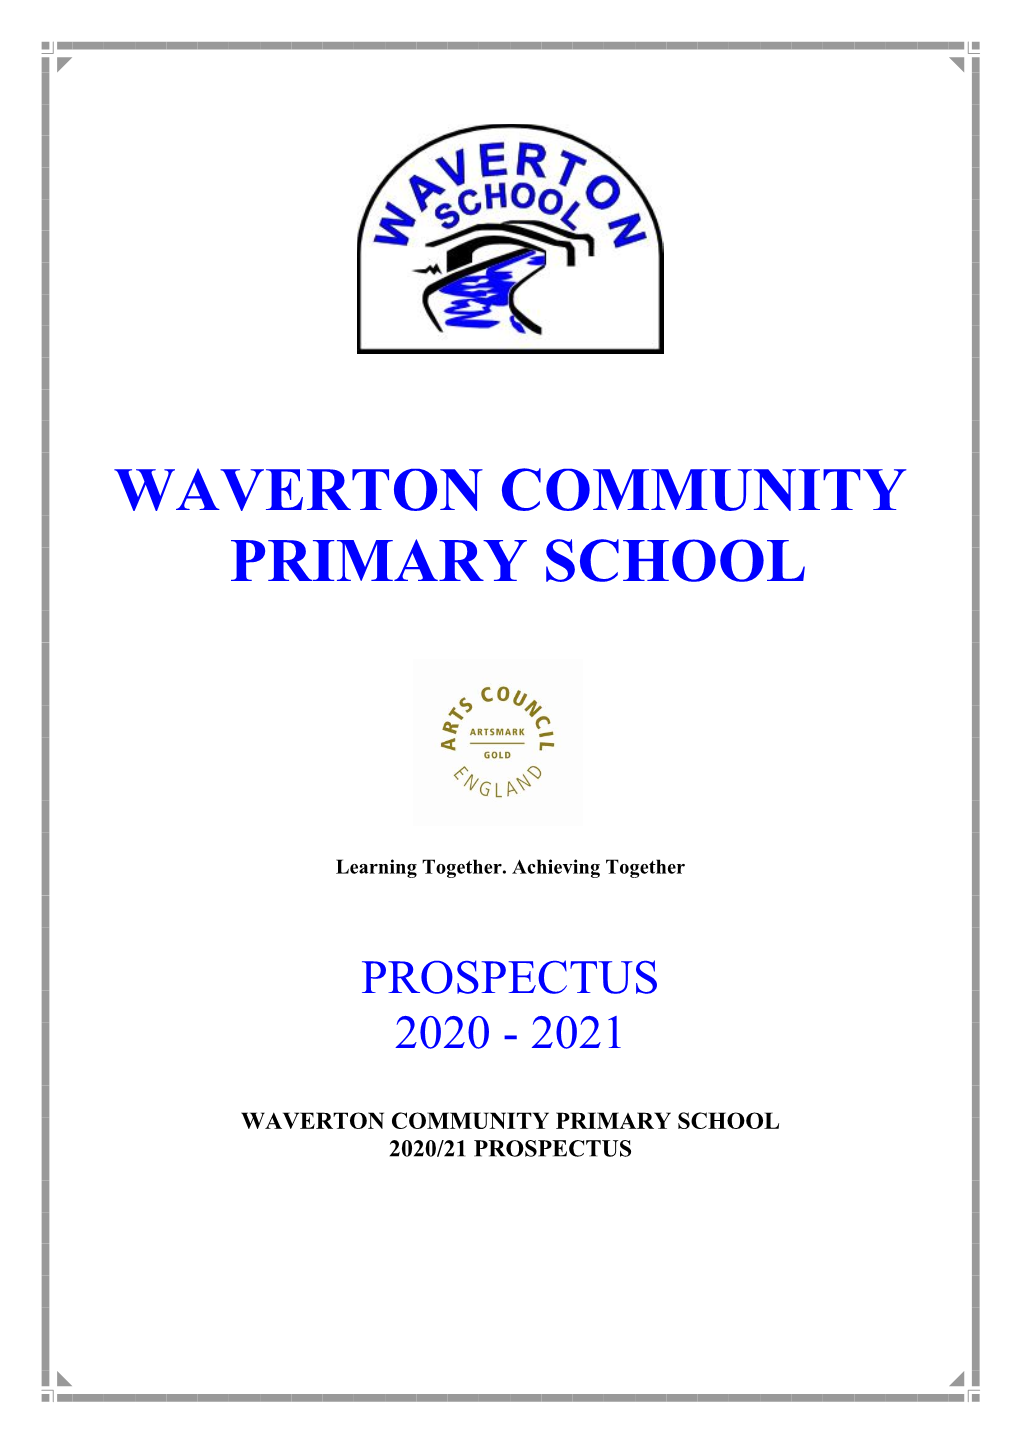 Waverton Community Primary School